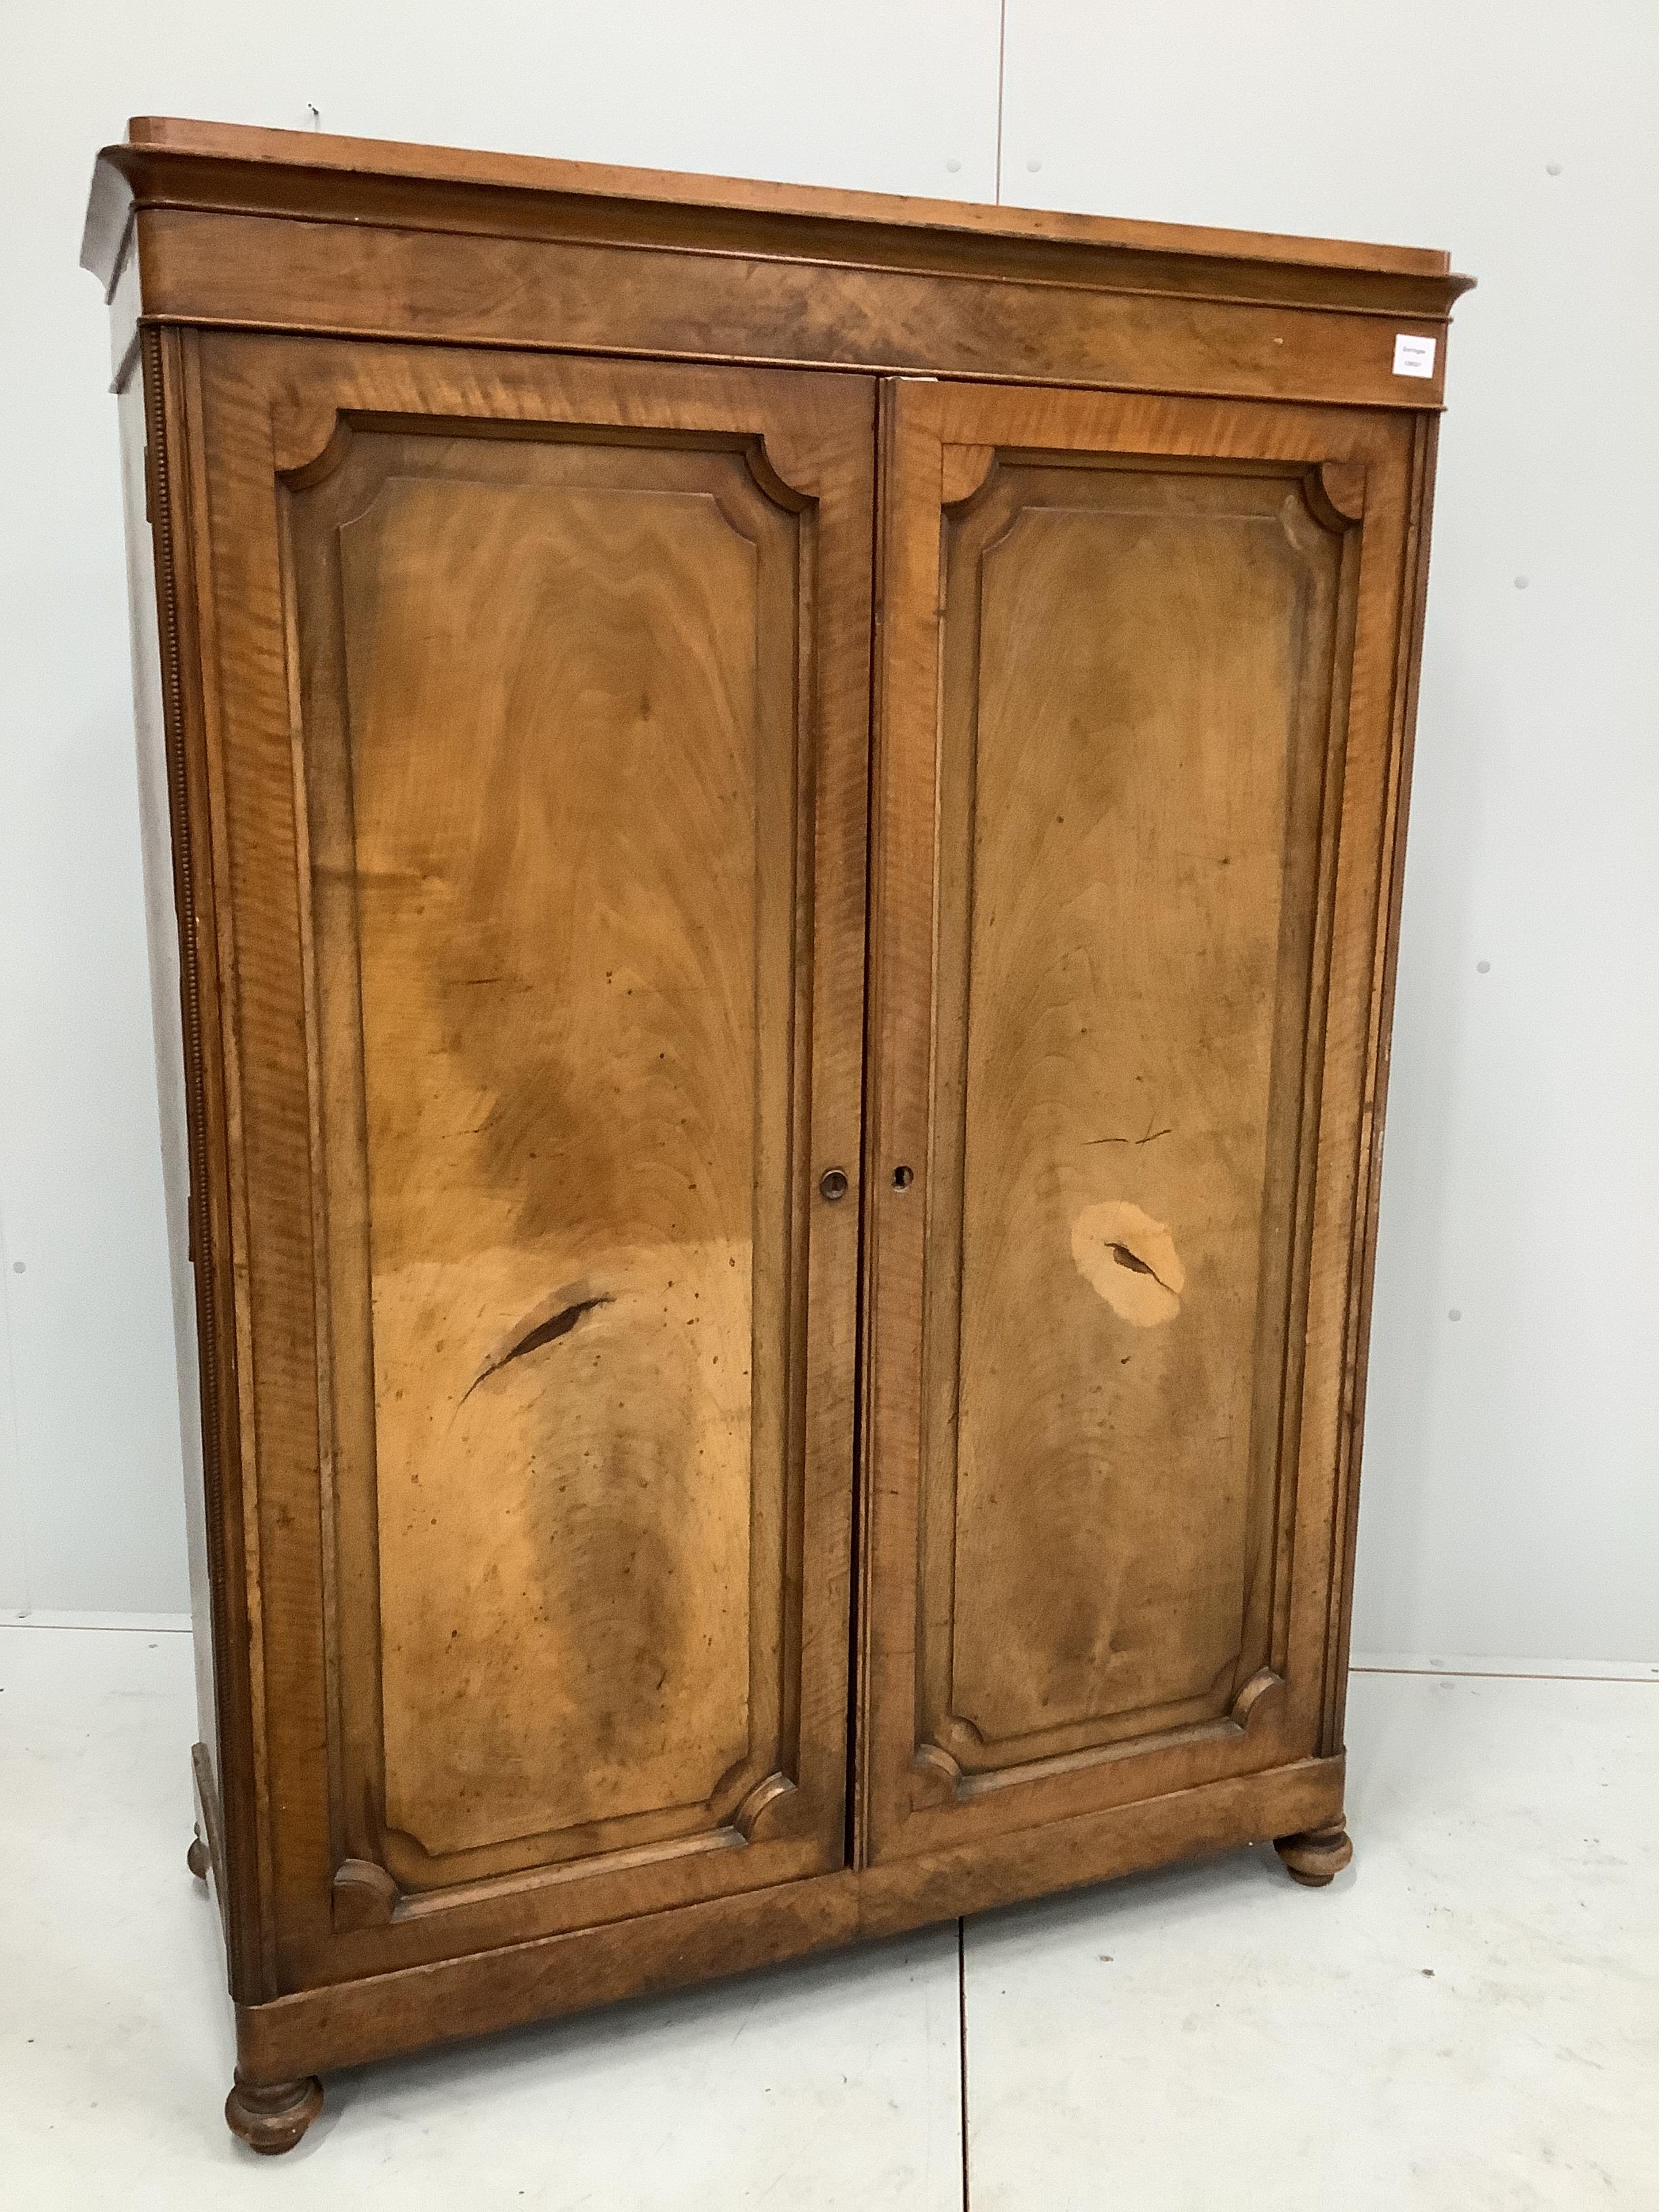 A 19th century French mahogany press cupboard, width 112cm, depth 46cm, height 158cm